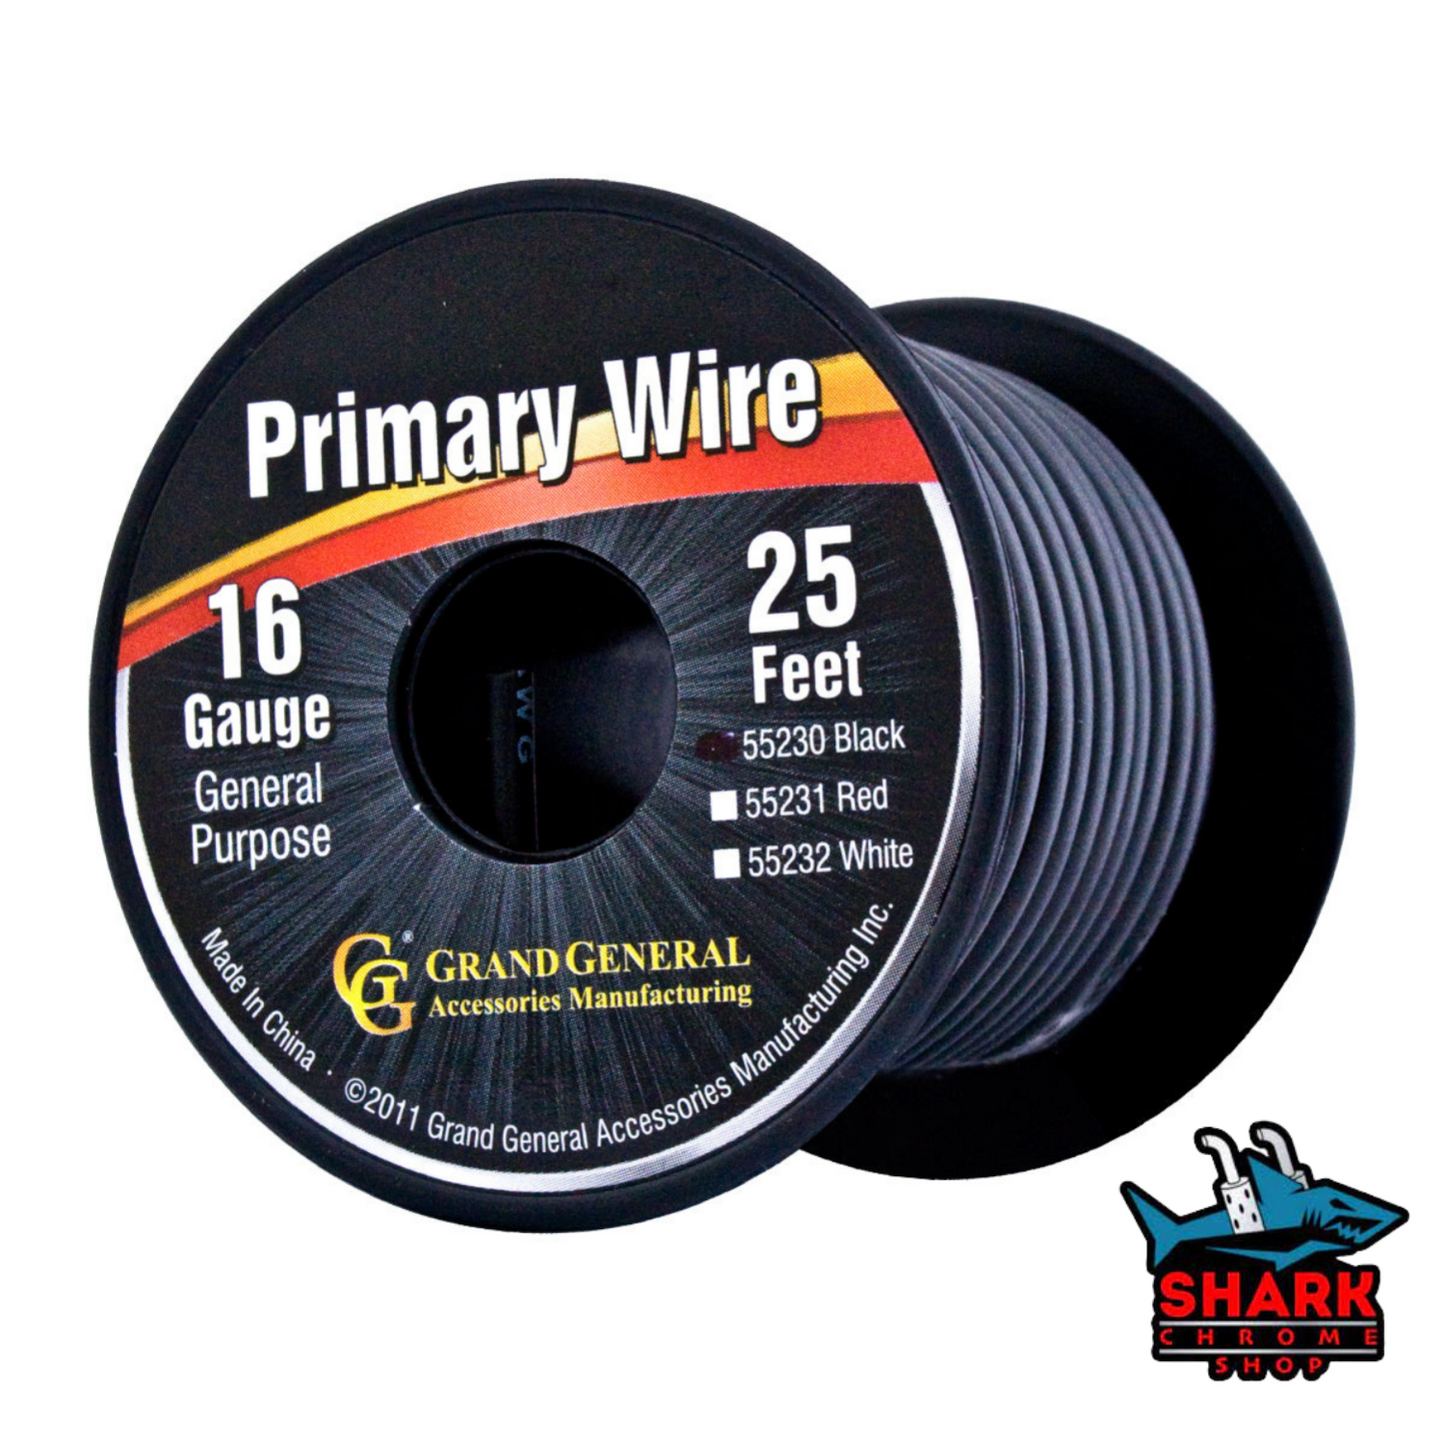 16 Gauge Primary Wire